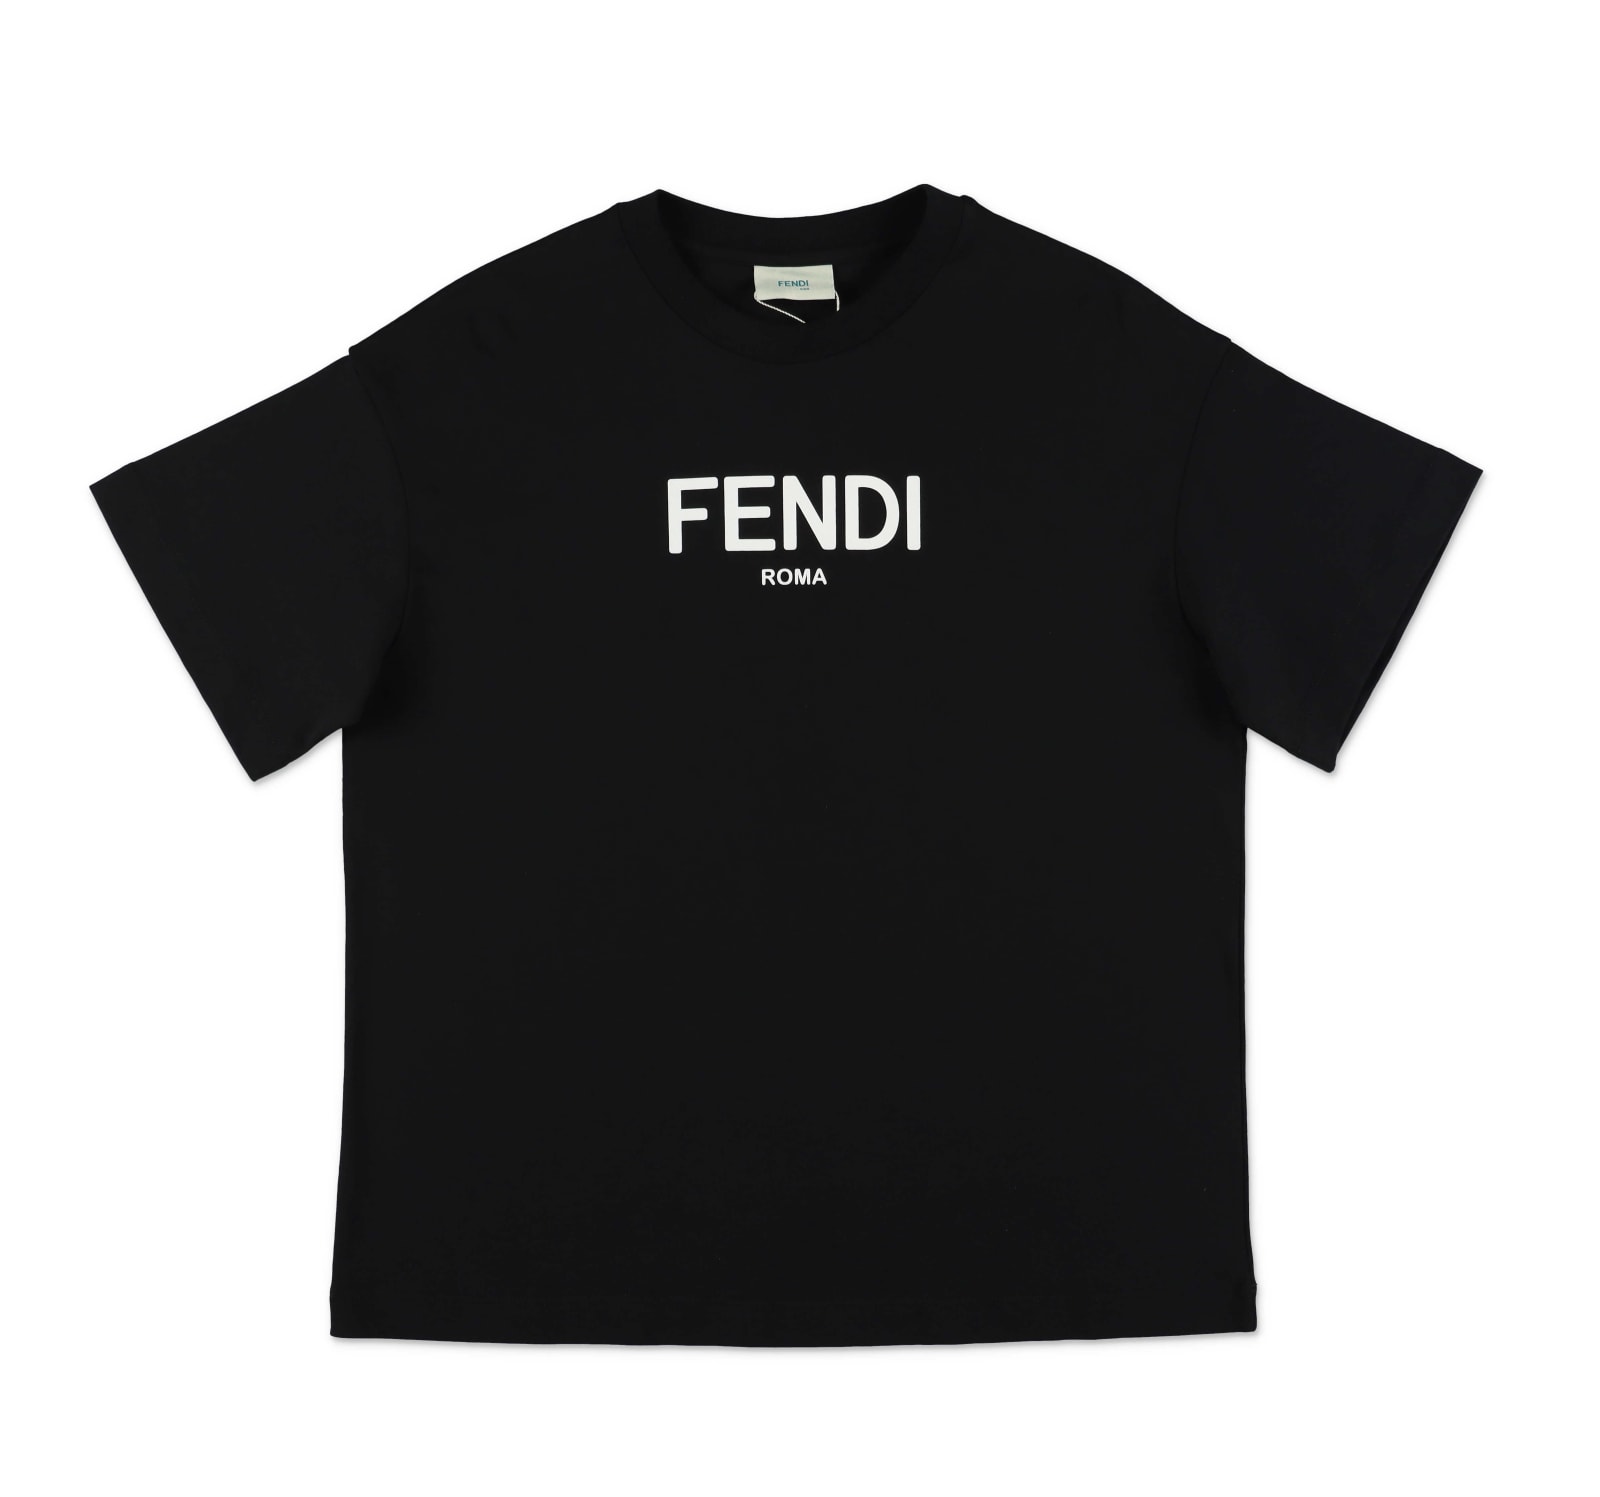 Fendi T-shirt Nera In Jersey Di Cotone Bambino